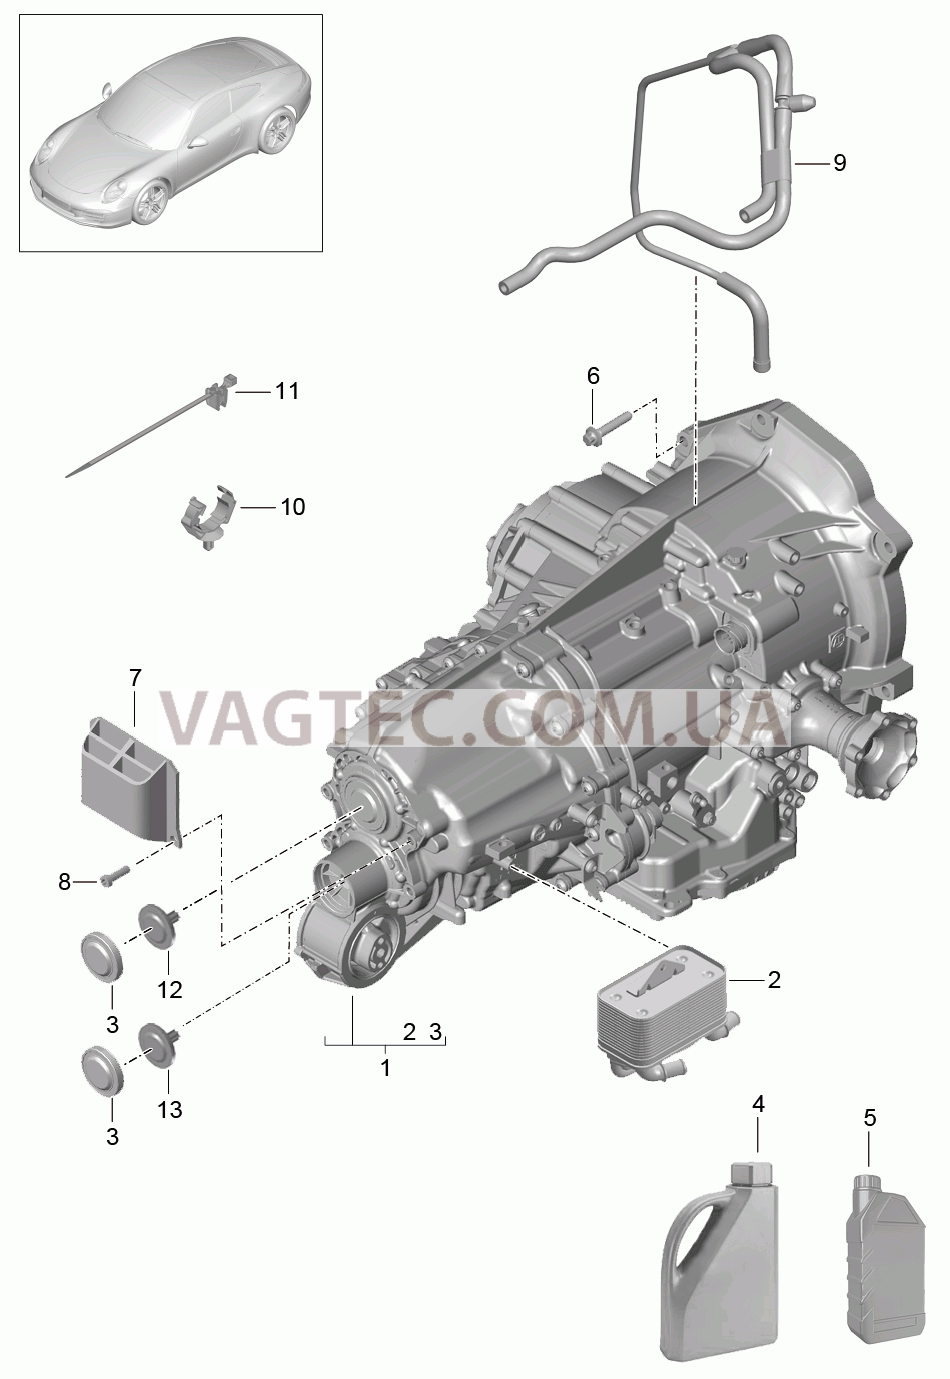 320-000 - PDK -, Коробка переключения передач, Заменная коробка передач
						
						CG1.05, CG1.35 для PORSCHE 911.Carrera 2012-2016